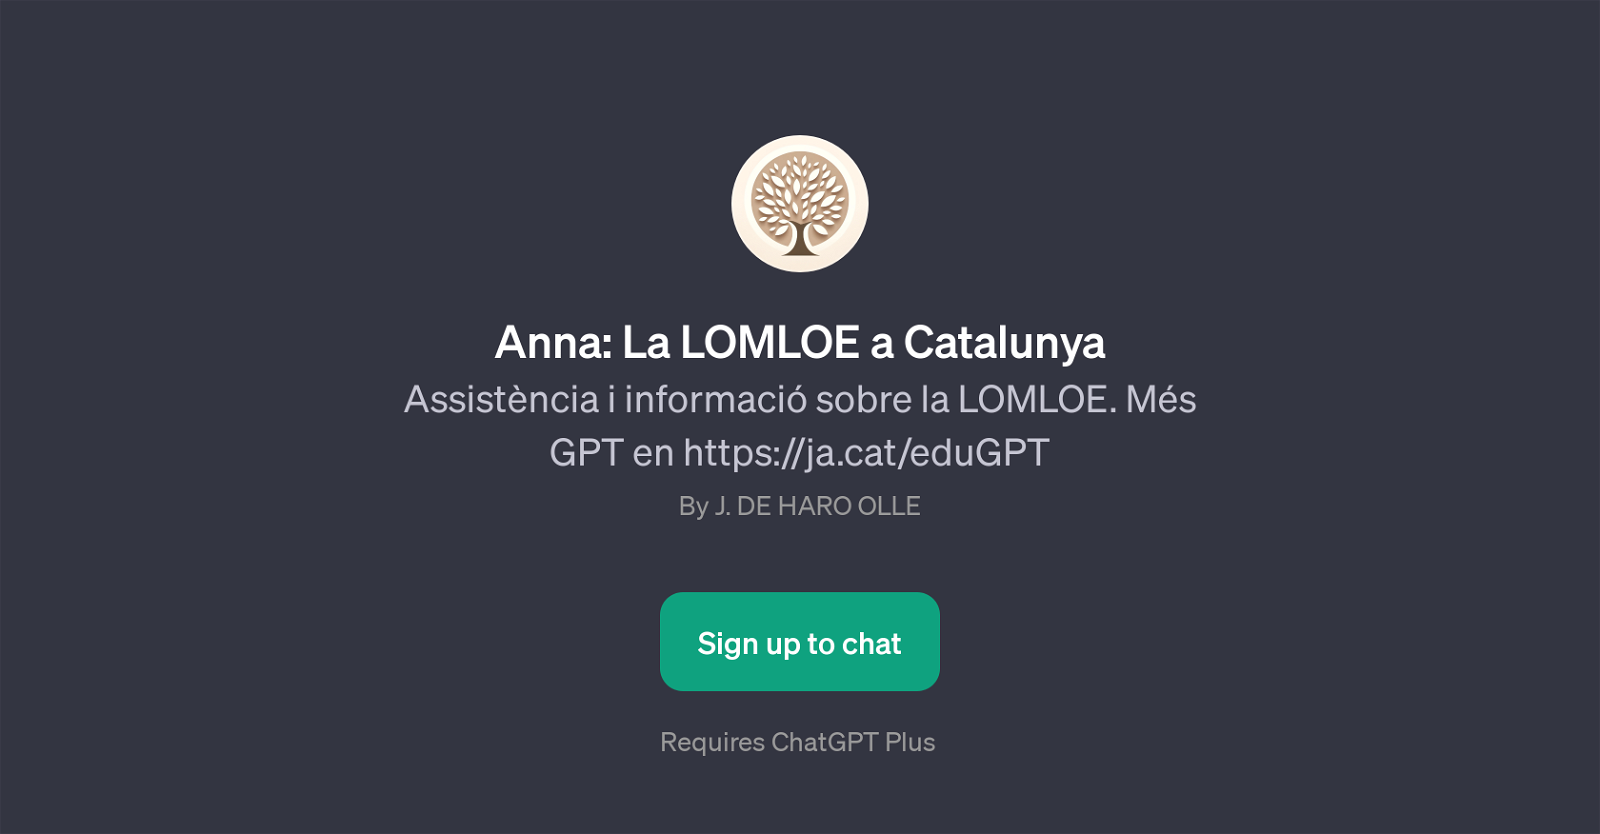 Anna: La LOMLOE a Catalunya website